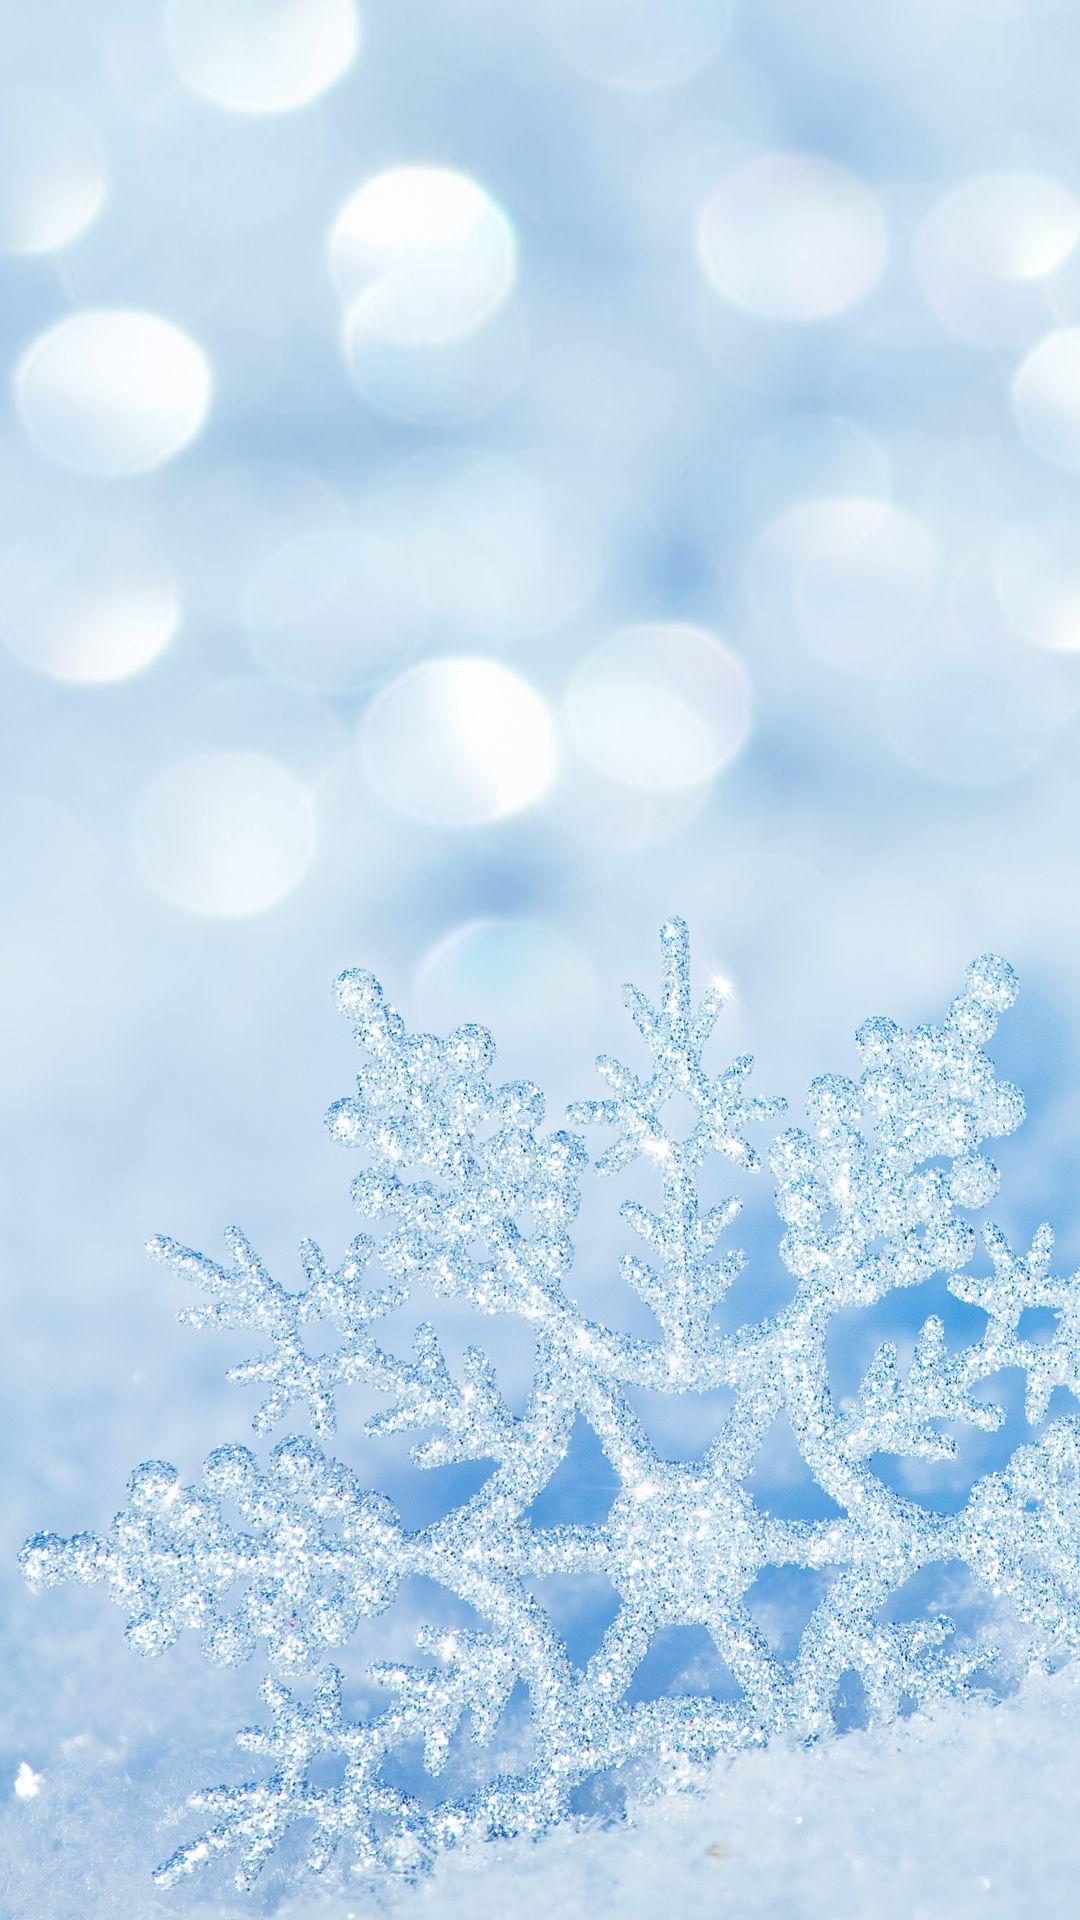 Winter Snowflake IPhone 7 Plus Wallpaper Quality Image And Transpa. IPhone Wallpaper Winter, Snowflake Wallpaper, Winter Wallpaper